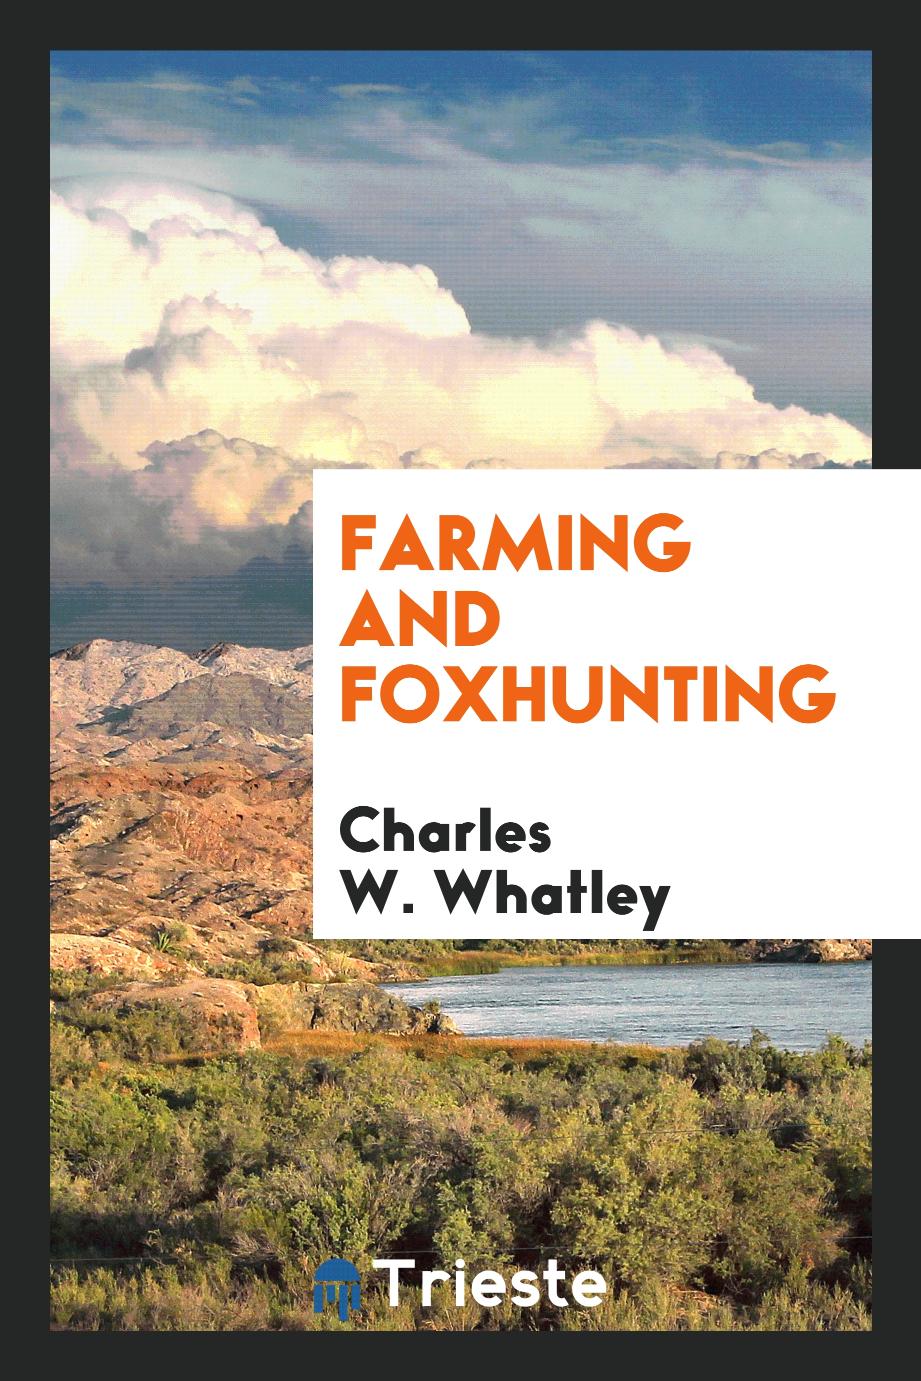 Farming and foxhunting